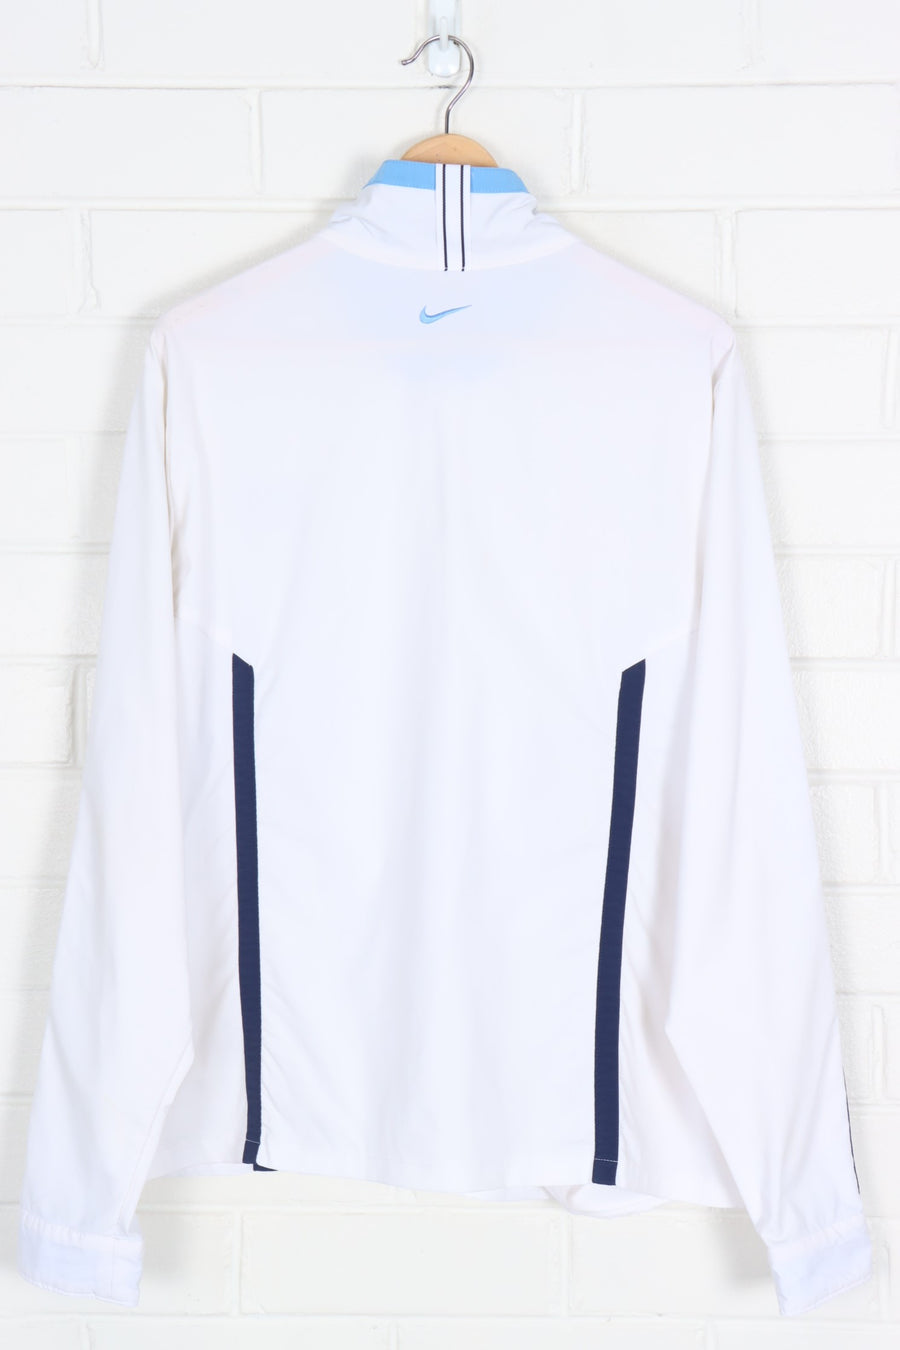 NIKE Embroidered Blue & White Striped Jacket (XL-XXL)